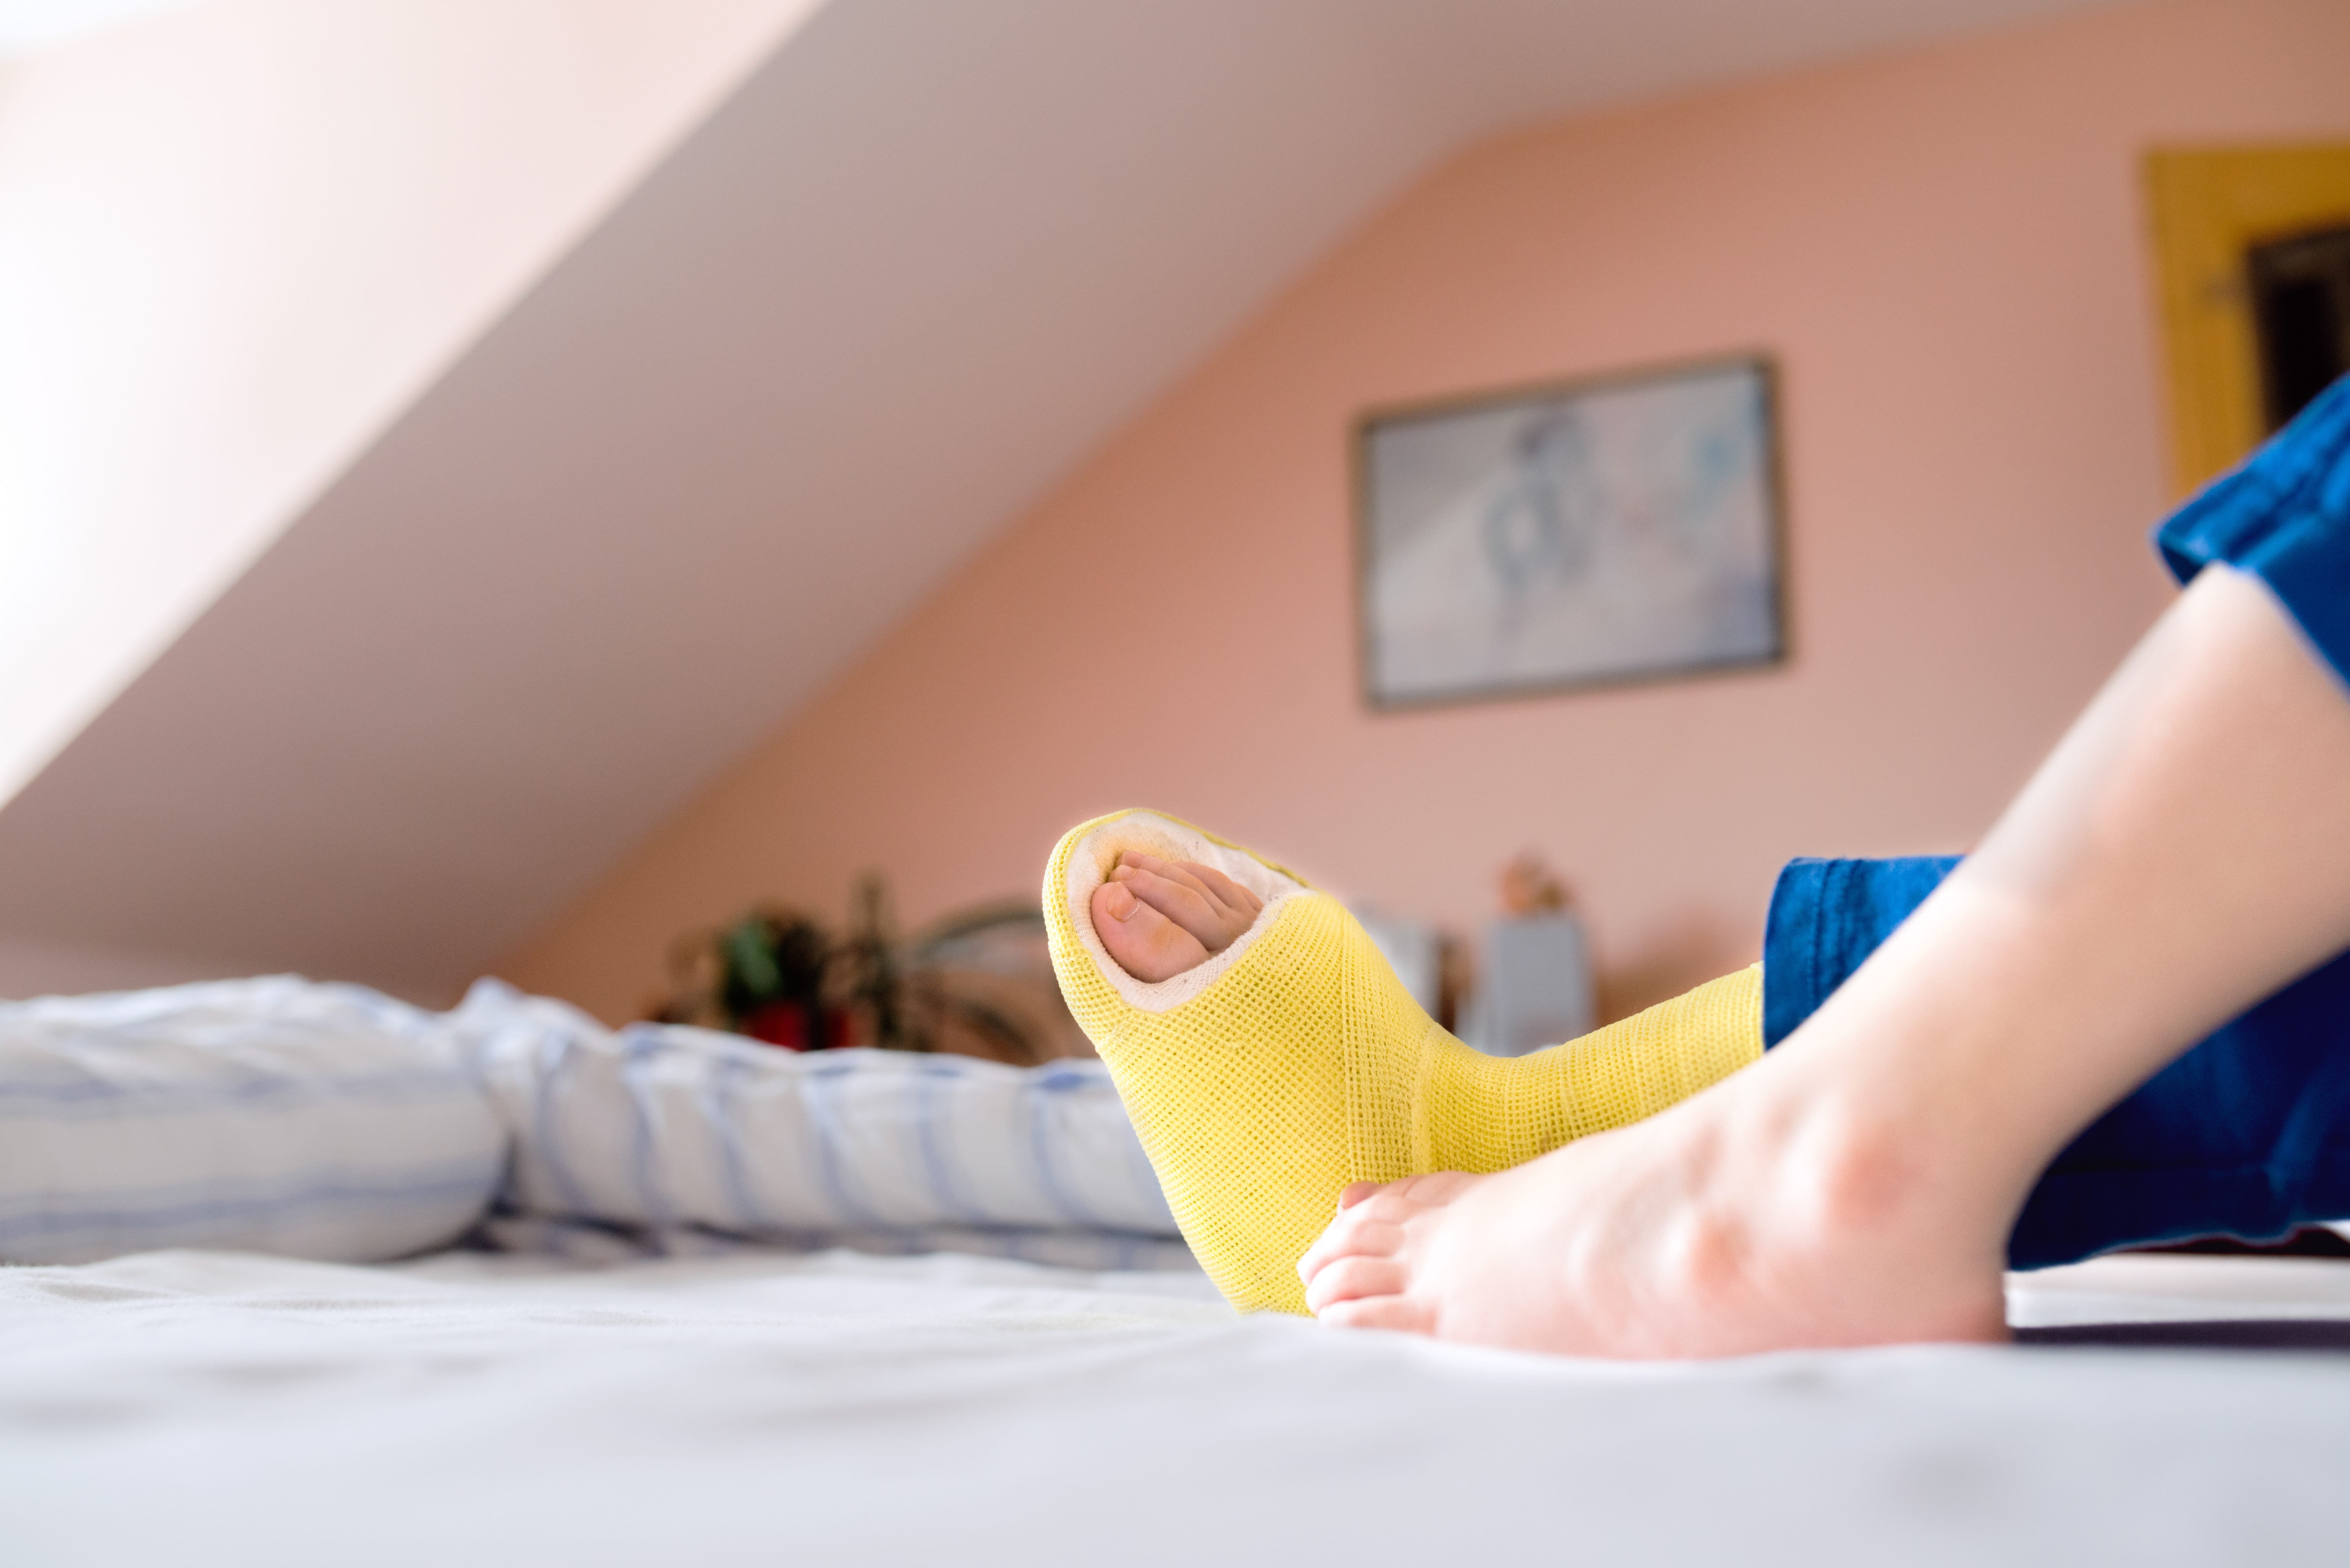 Mariska Hargitay Reveals She Broke Her Right Ankle: 'Summer Look'